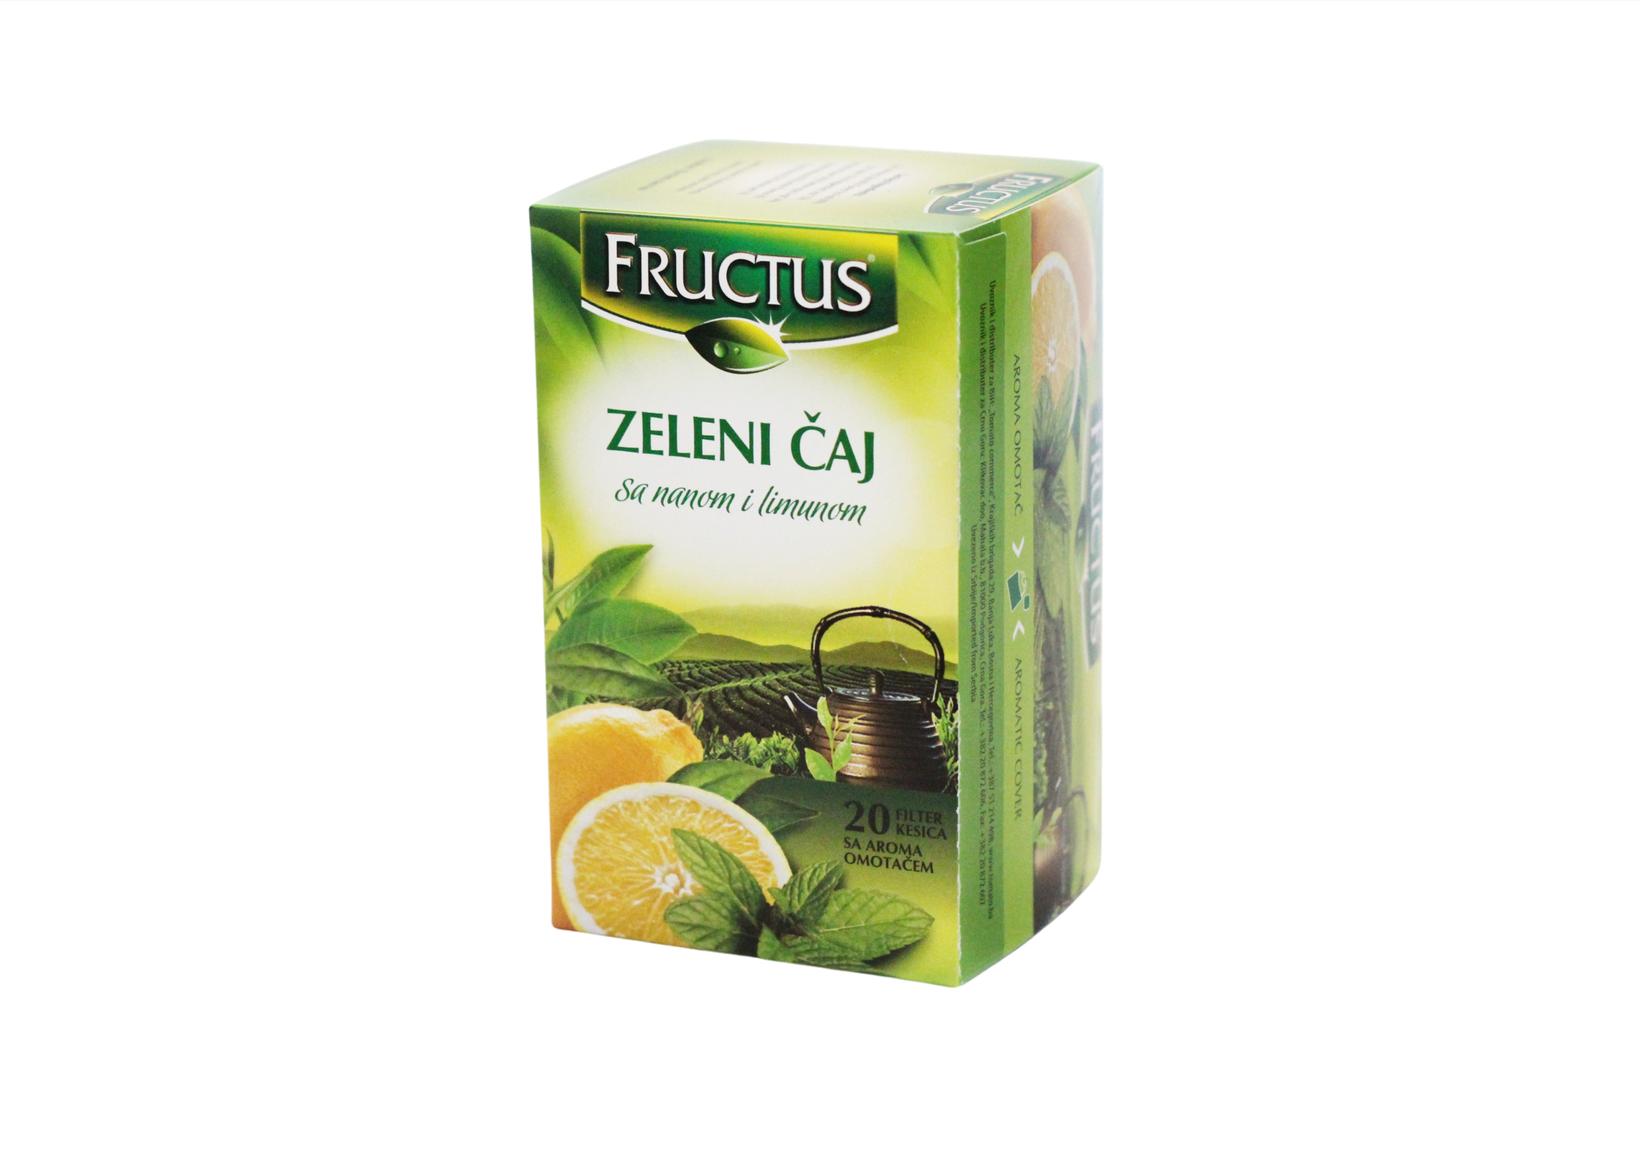 Selected image for FRUCTUS Zeleni čaj sa nanom i limunom 30g, 20x1.5g